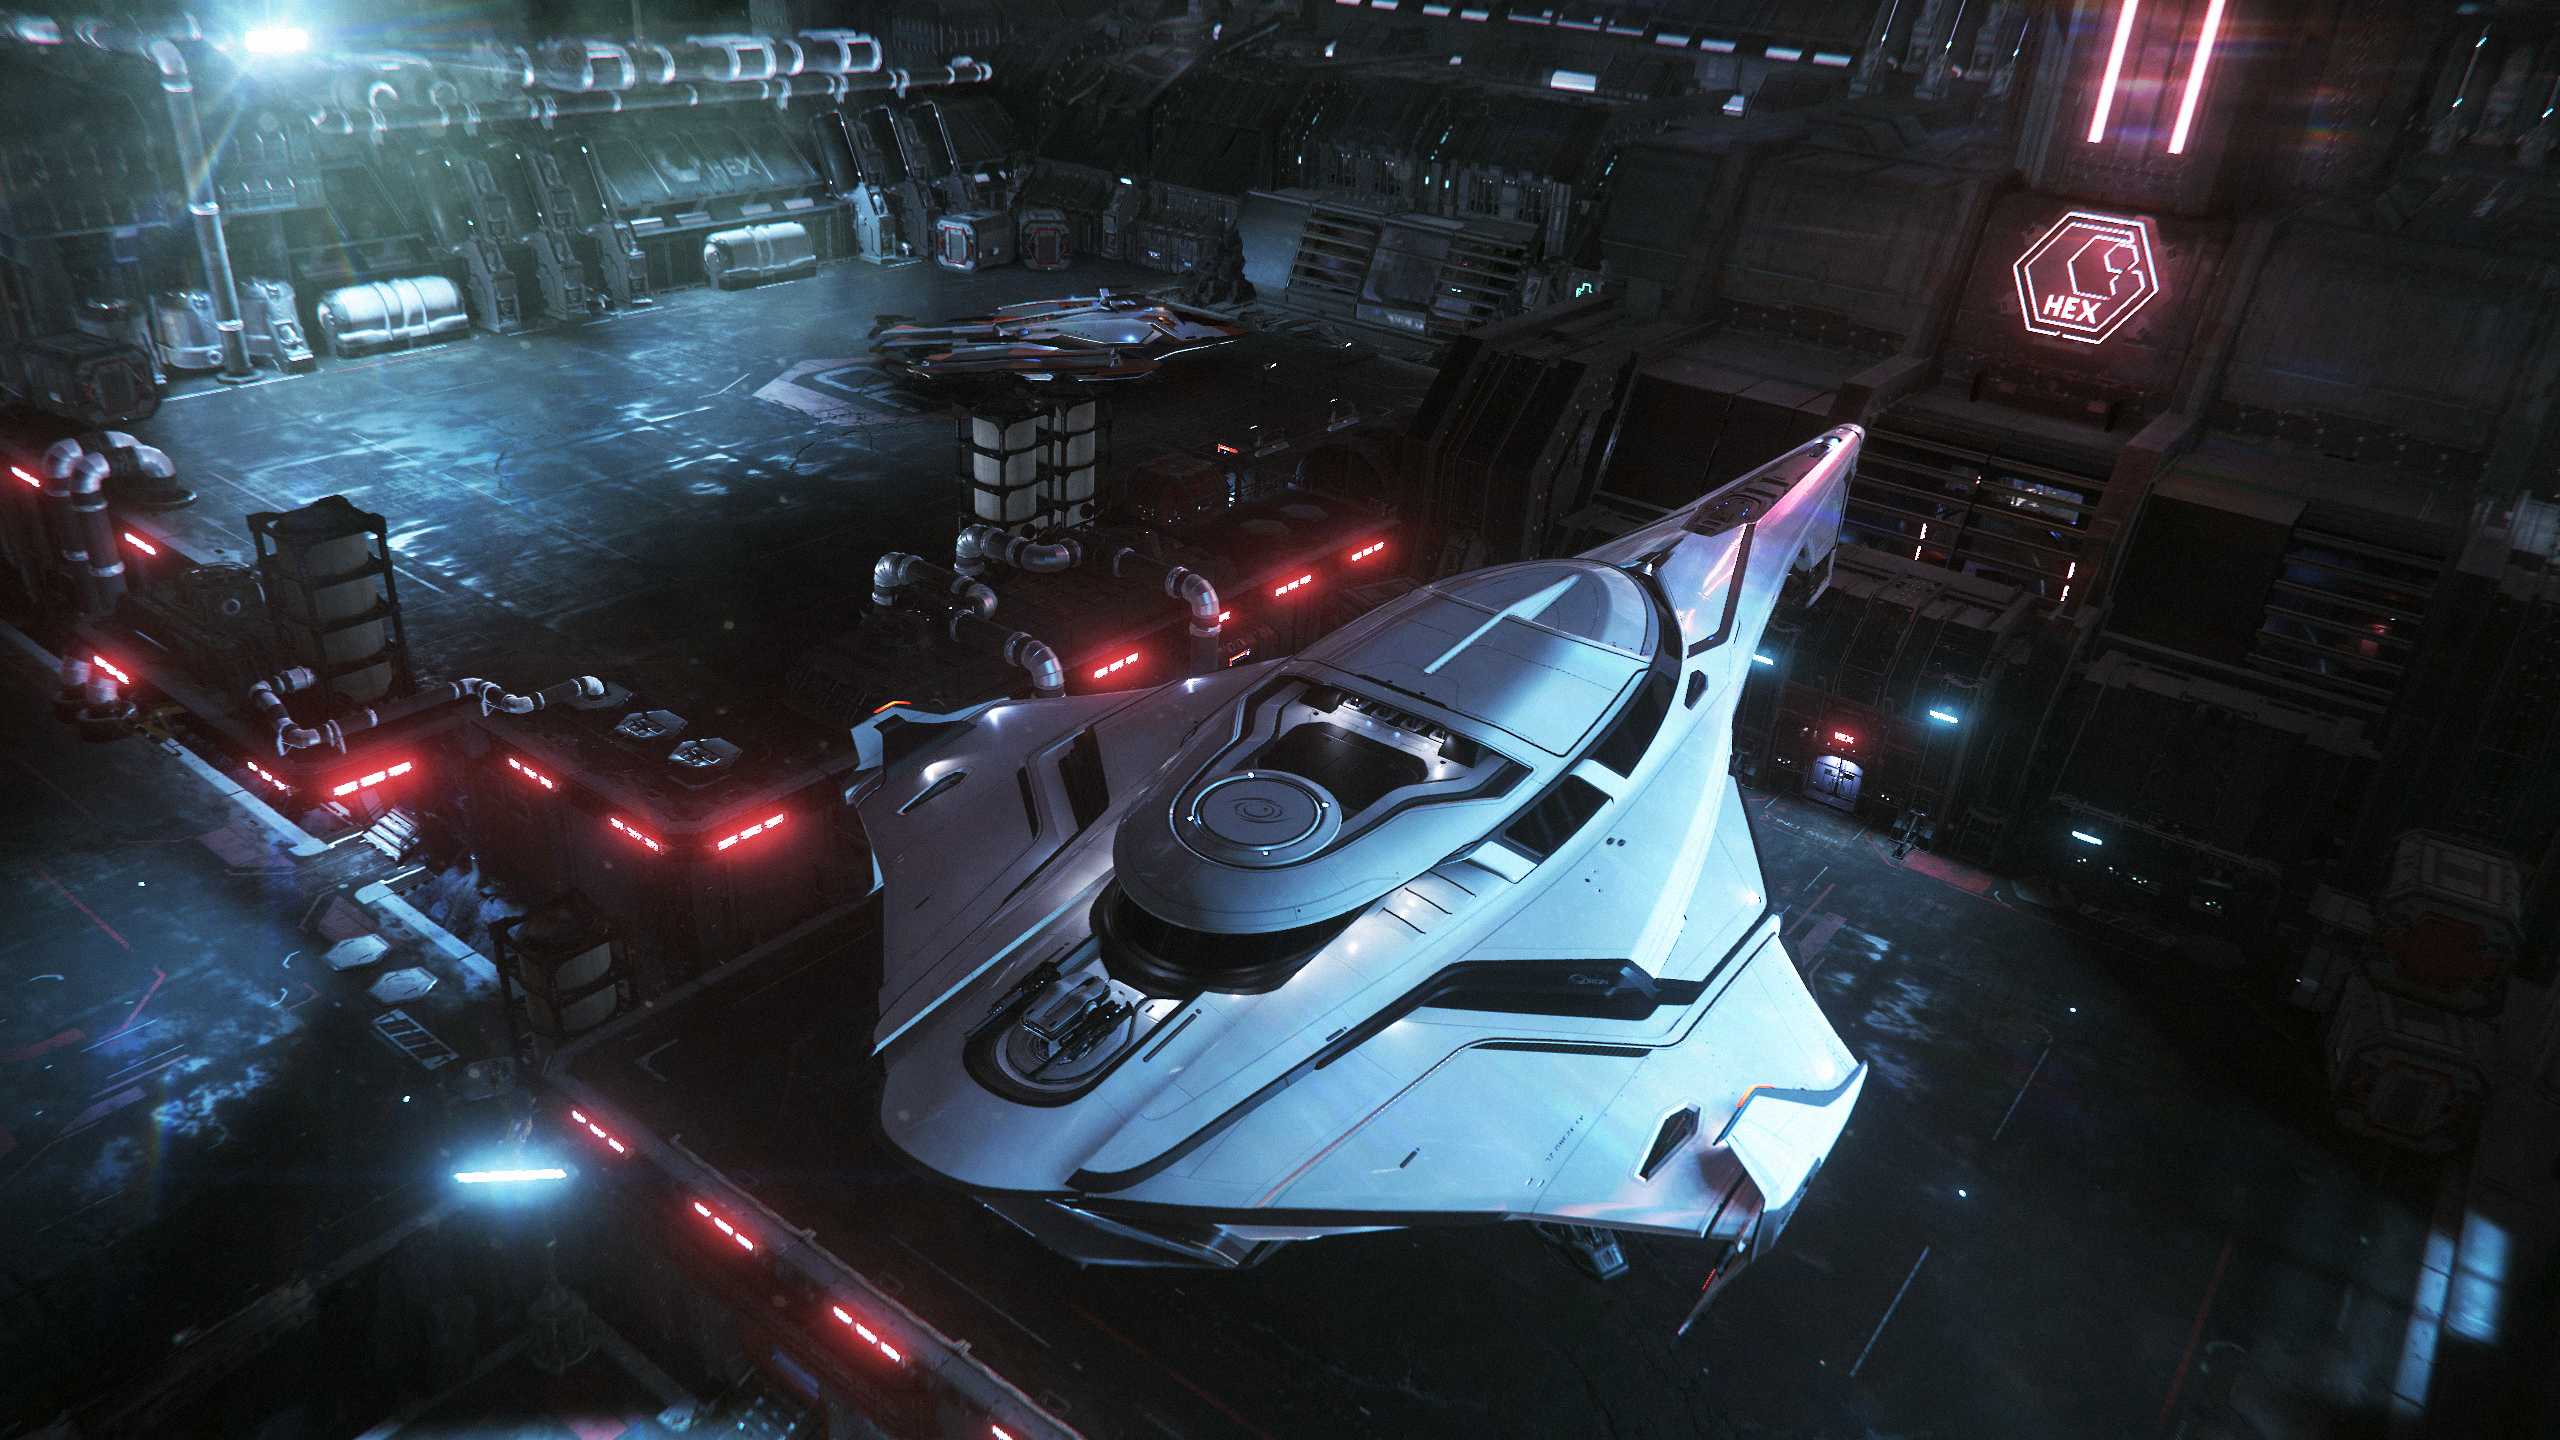 General 2560x1440 Star Citizen video games screen shot science fiction Origin 400i spaceship hangar